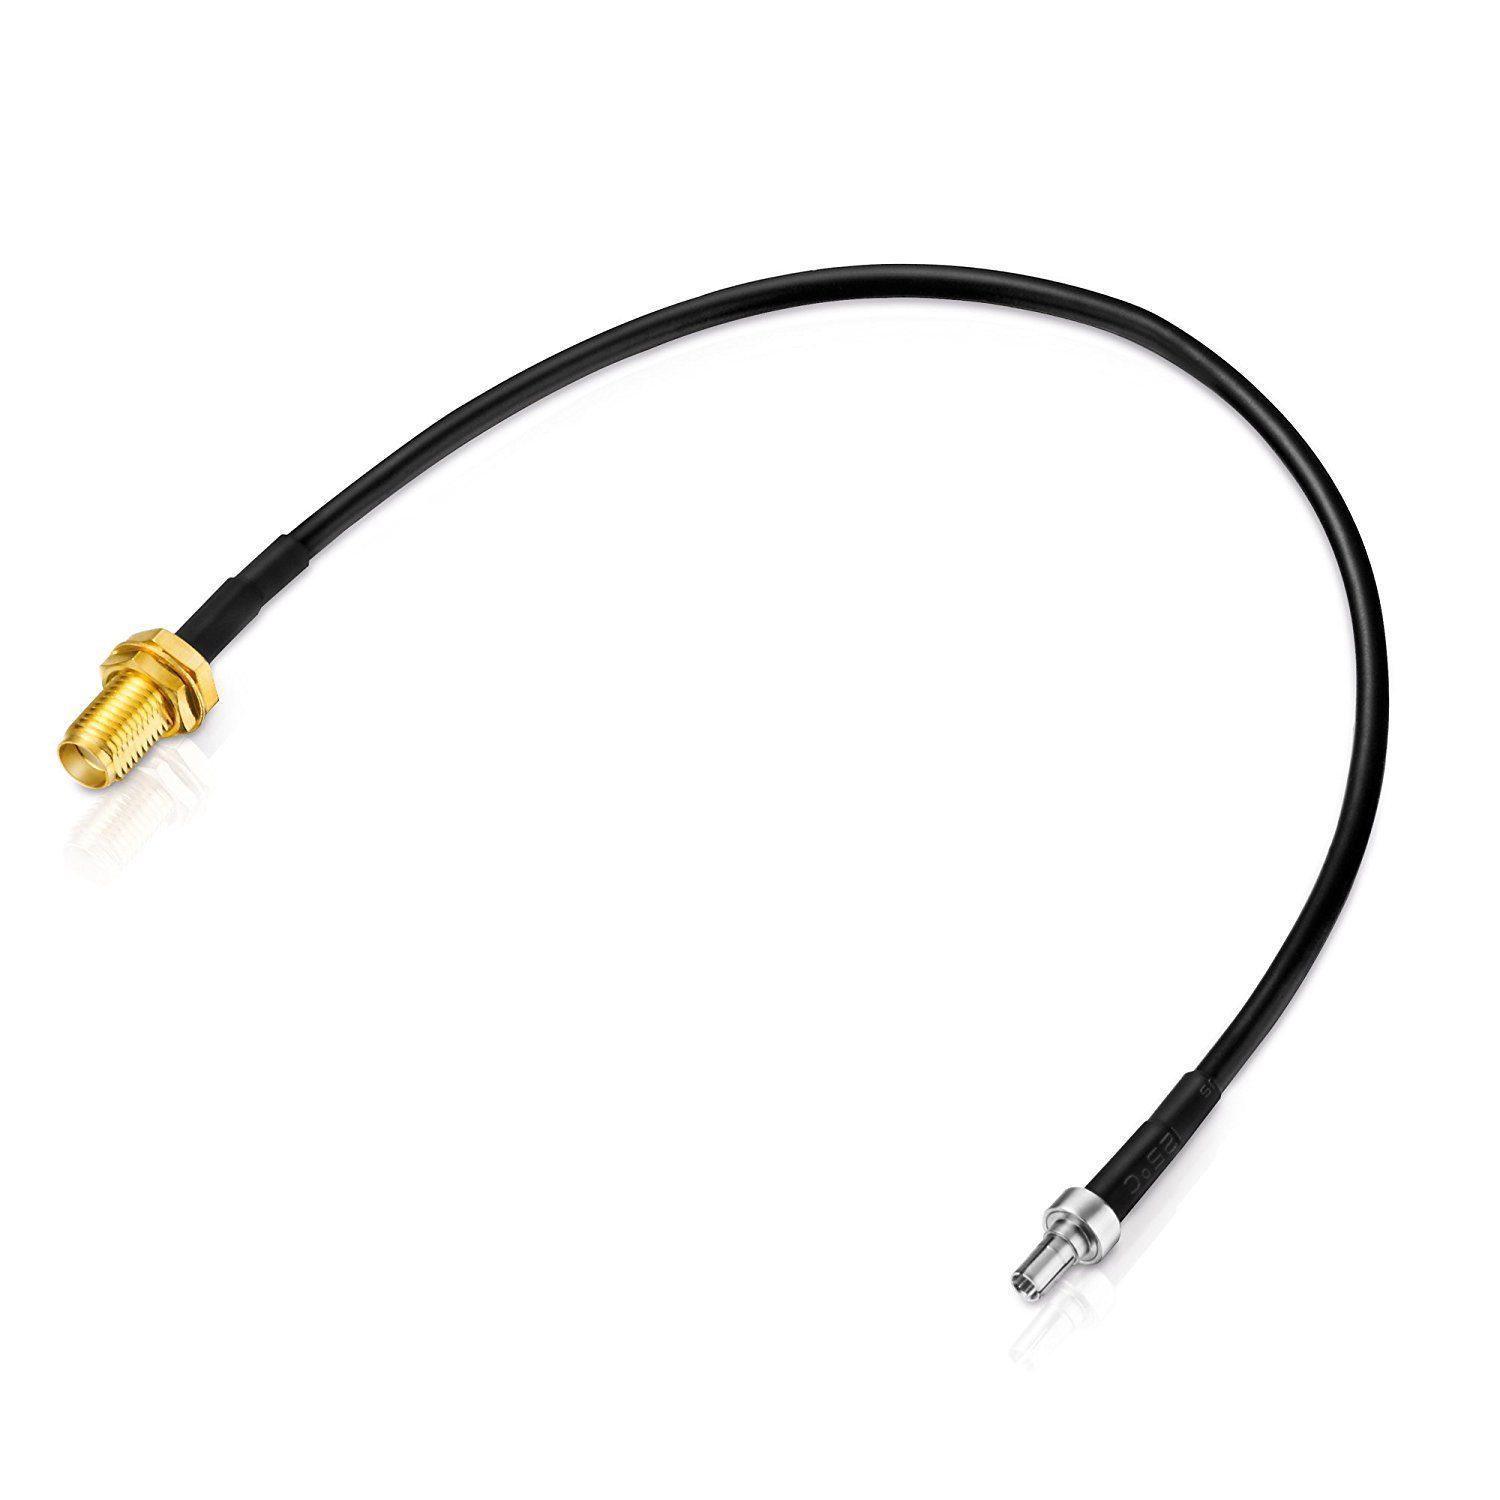 adaptare adaptare 60691 20 cm Pigtail CRC9-Stecker gerade / SMA-Buchse Adapter- SAT-Kabel